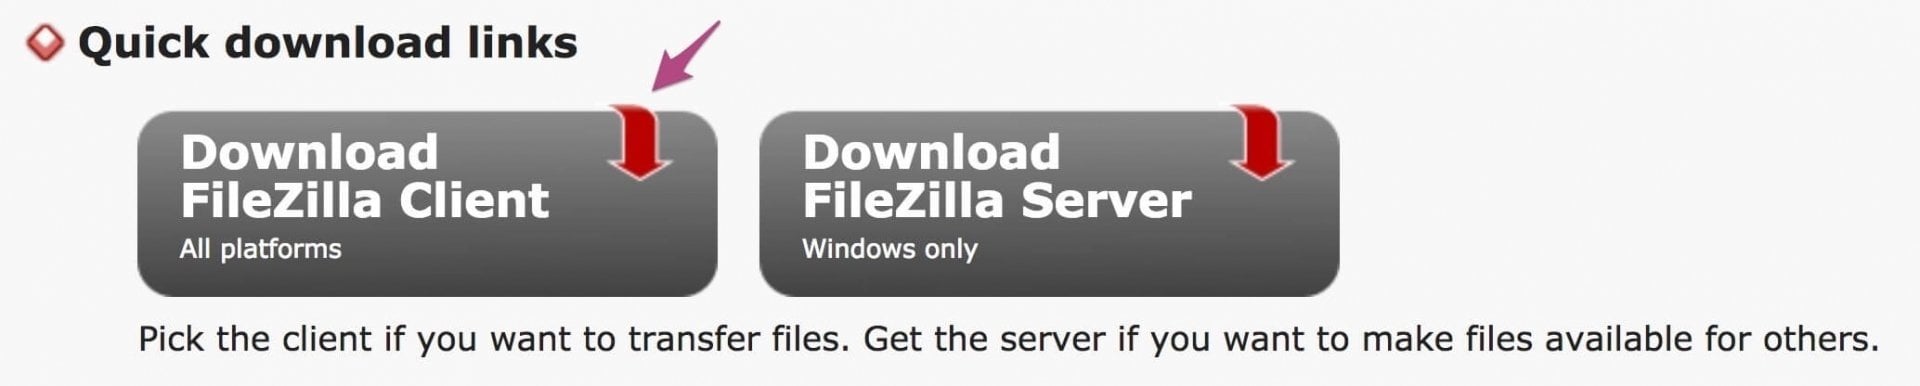 Installing FileZilla